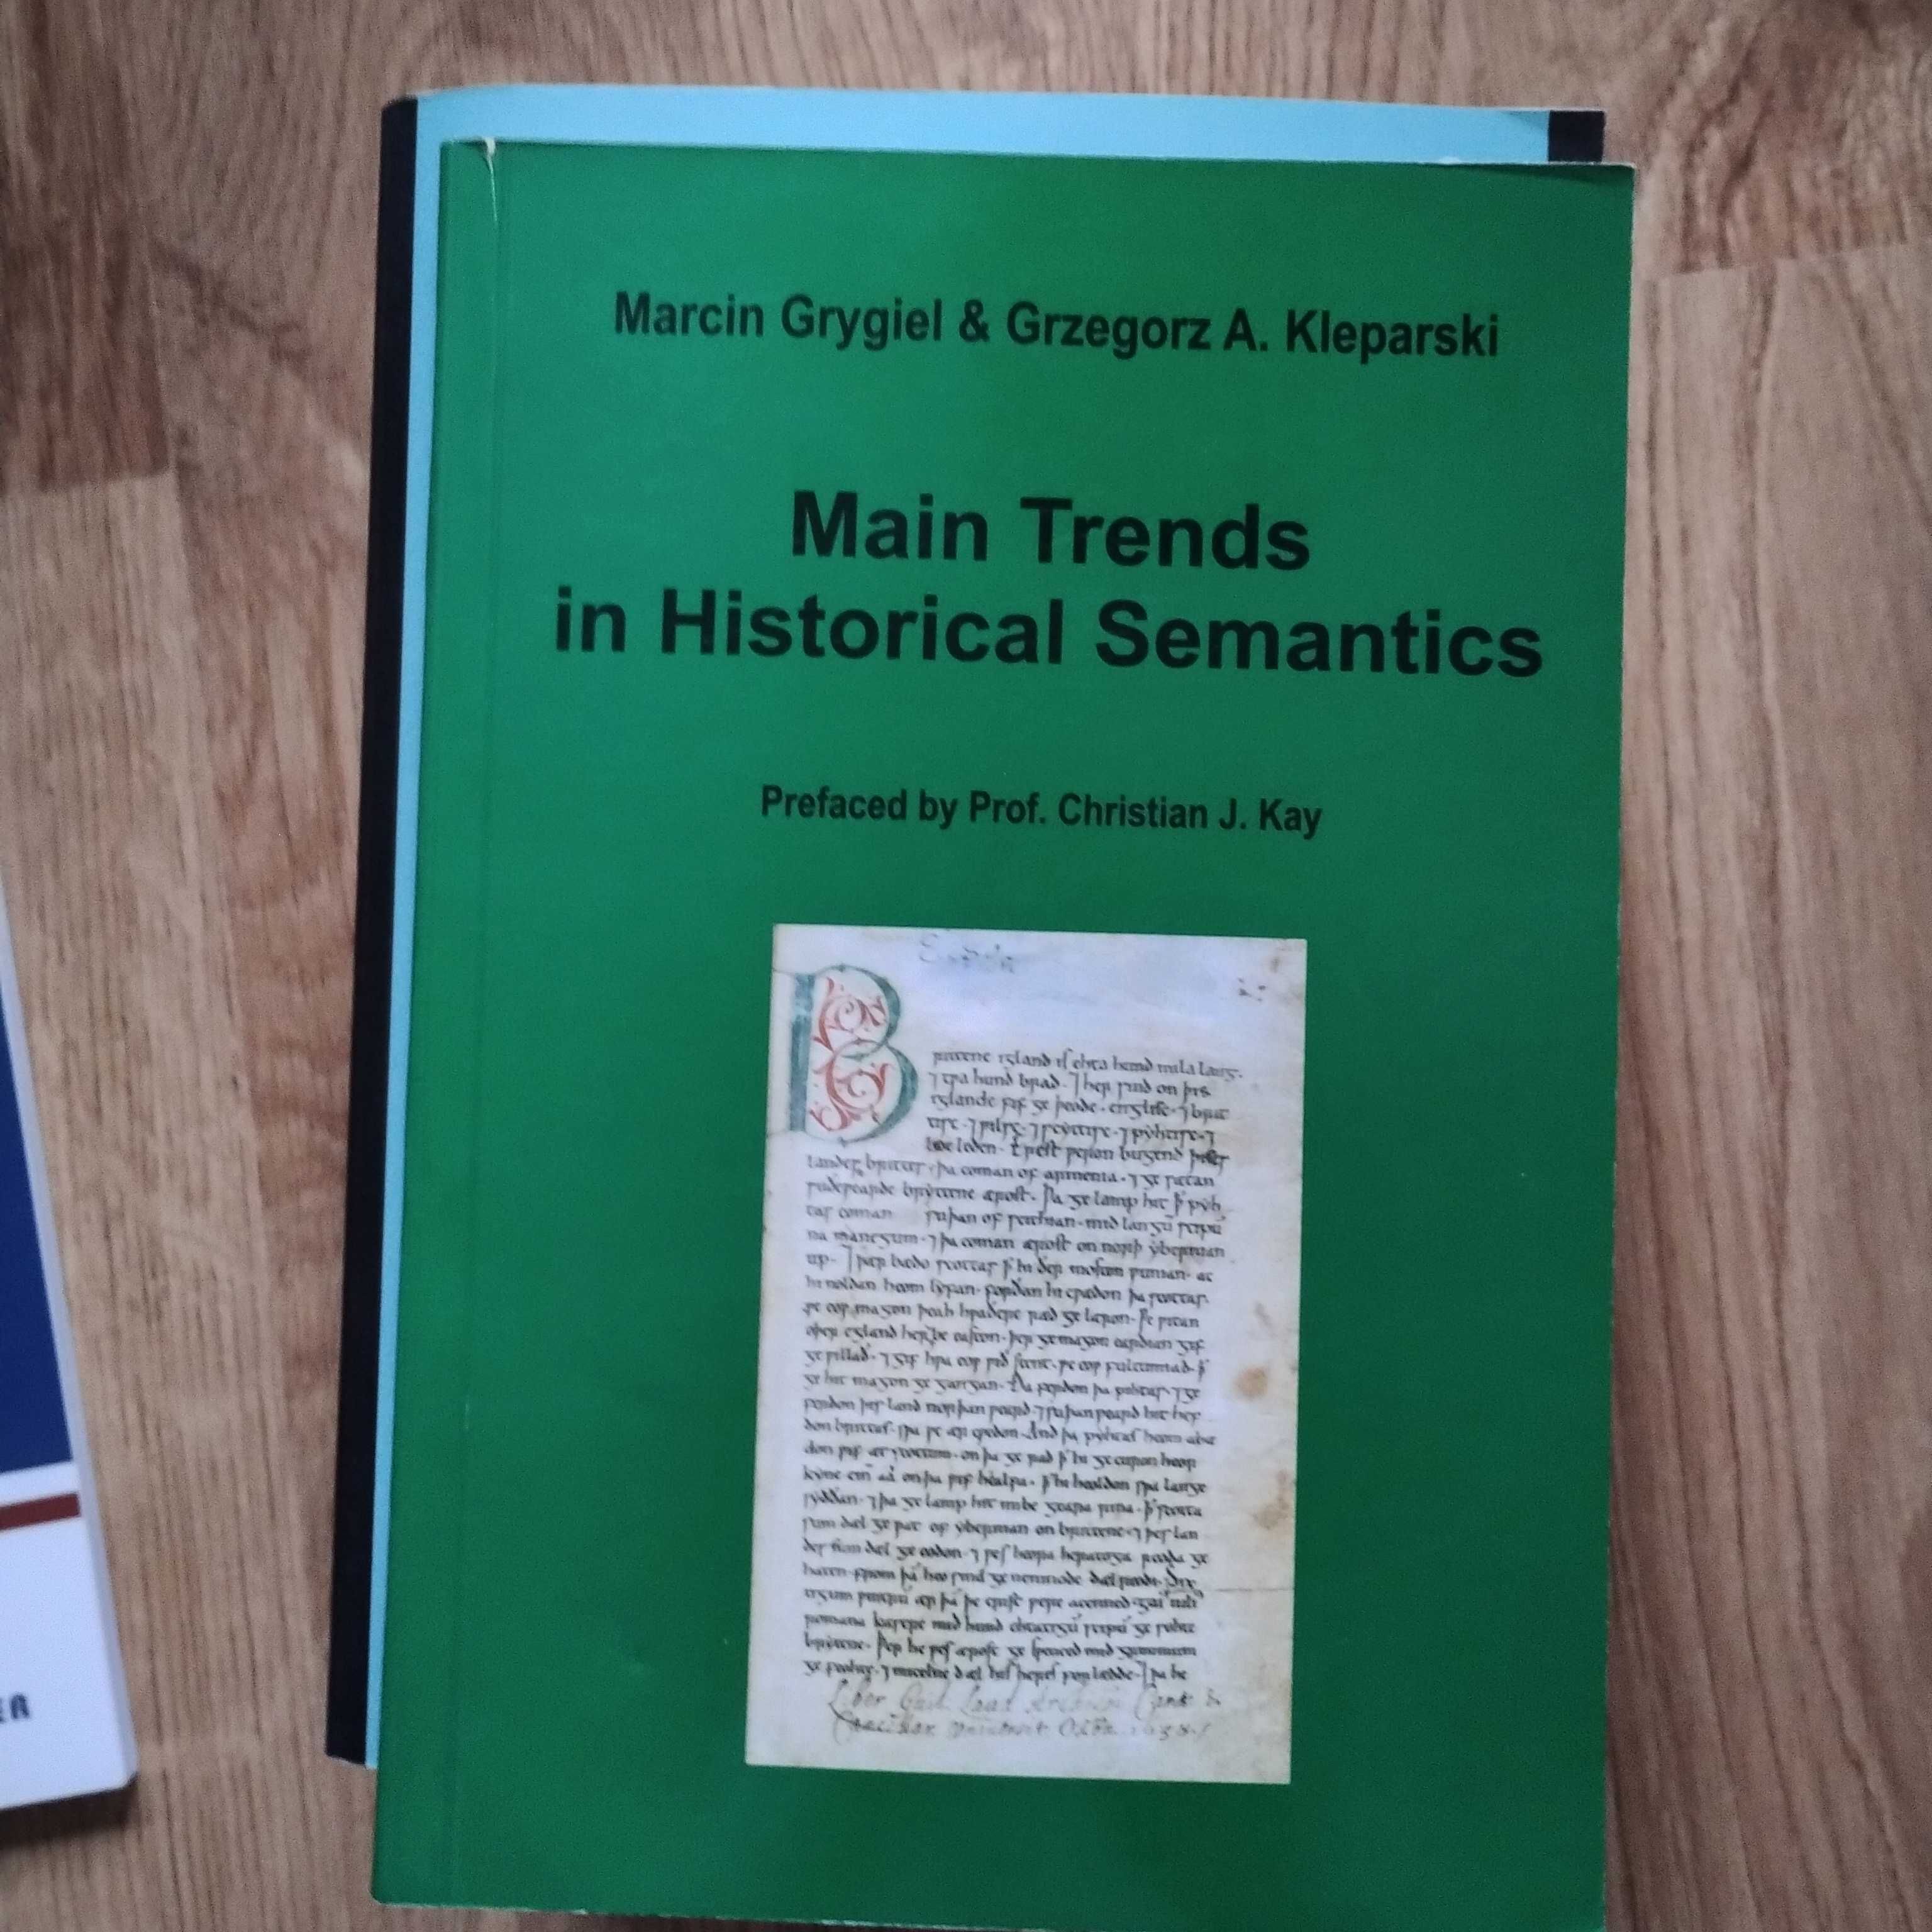 Main trends in historical semantics